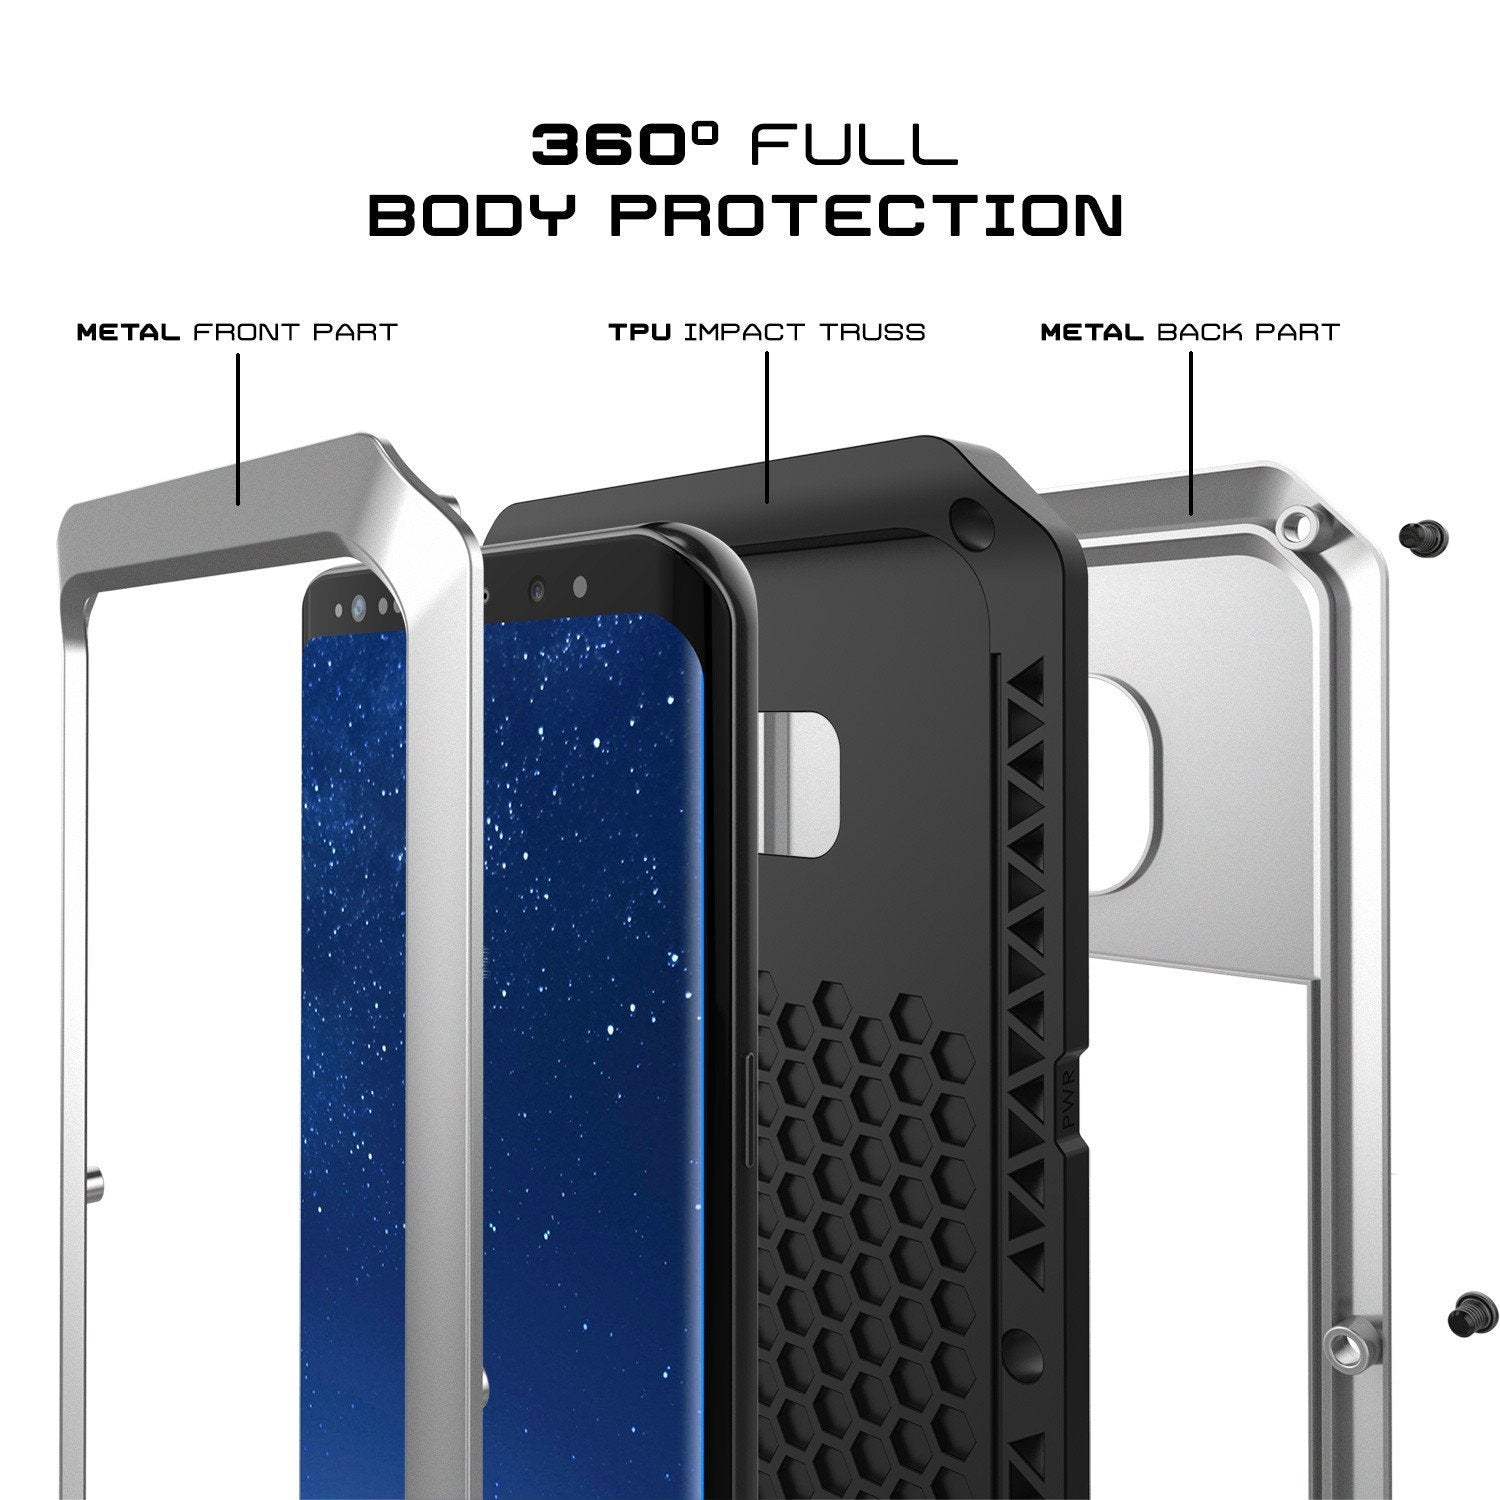 Galaxy Note 8  Case, PUNKcase Metallic Silver Shockproof  Slim Metal Armor Case [Silver] - PunkCase NZ